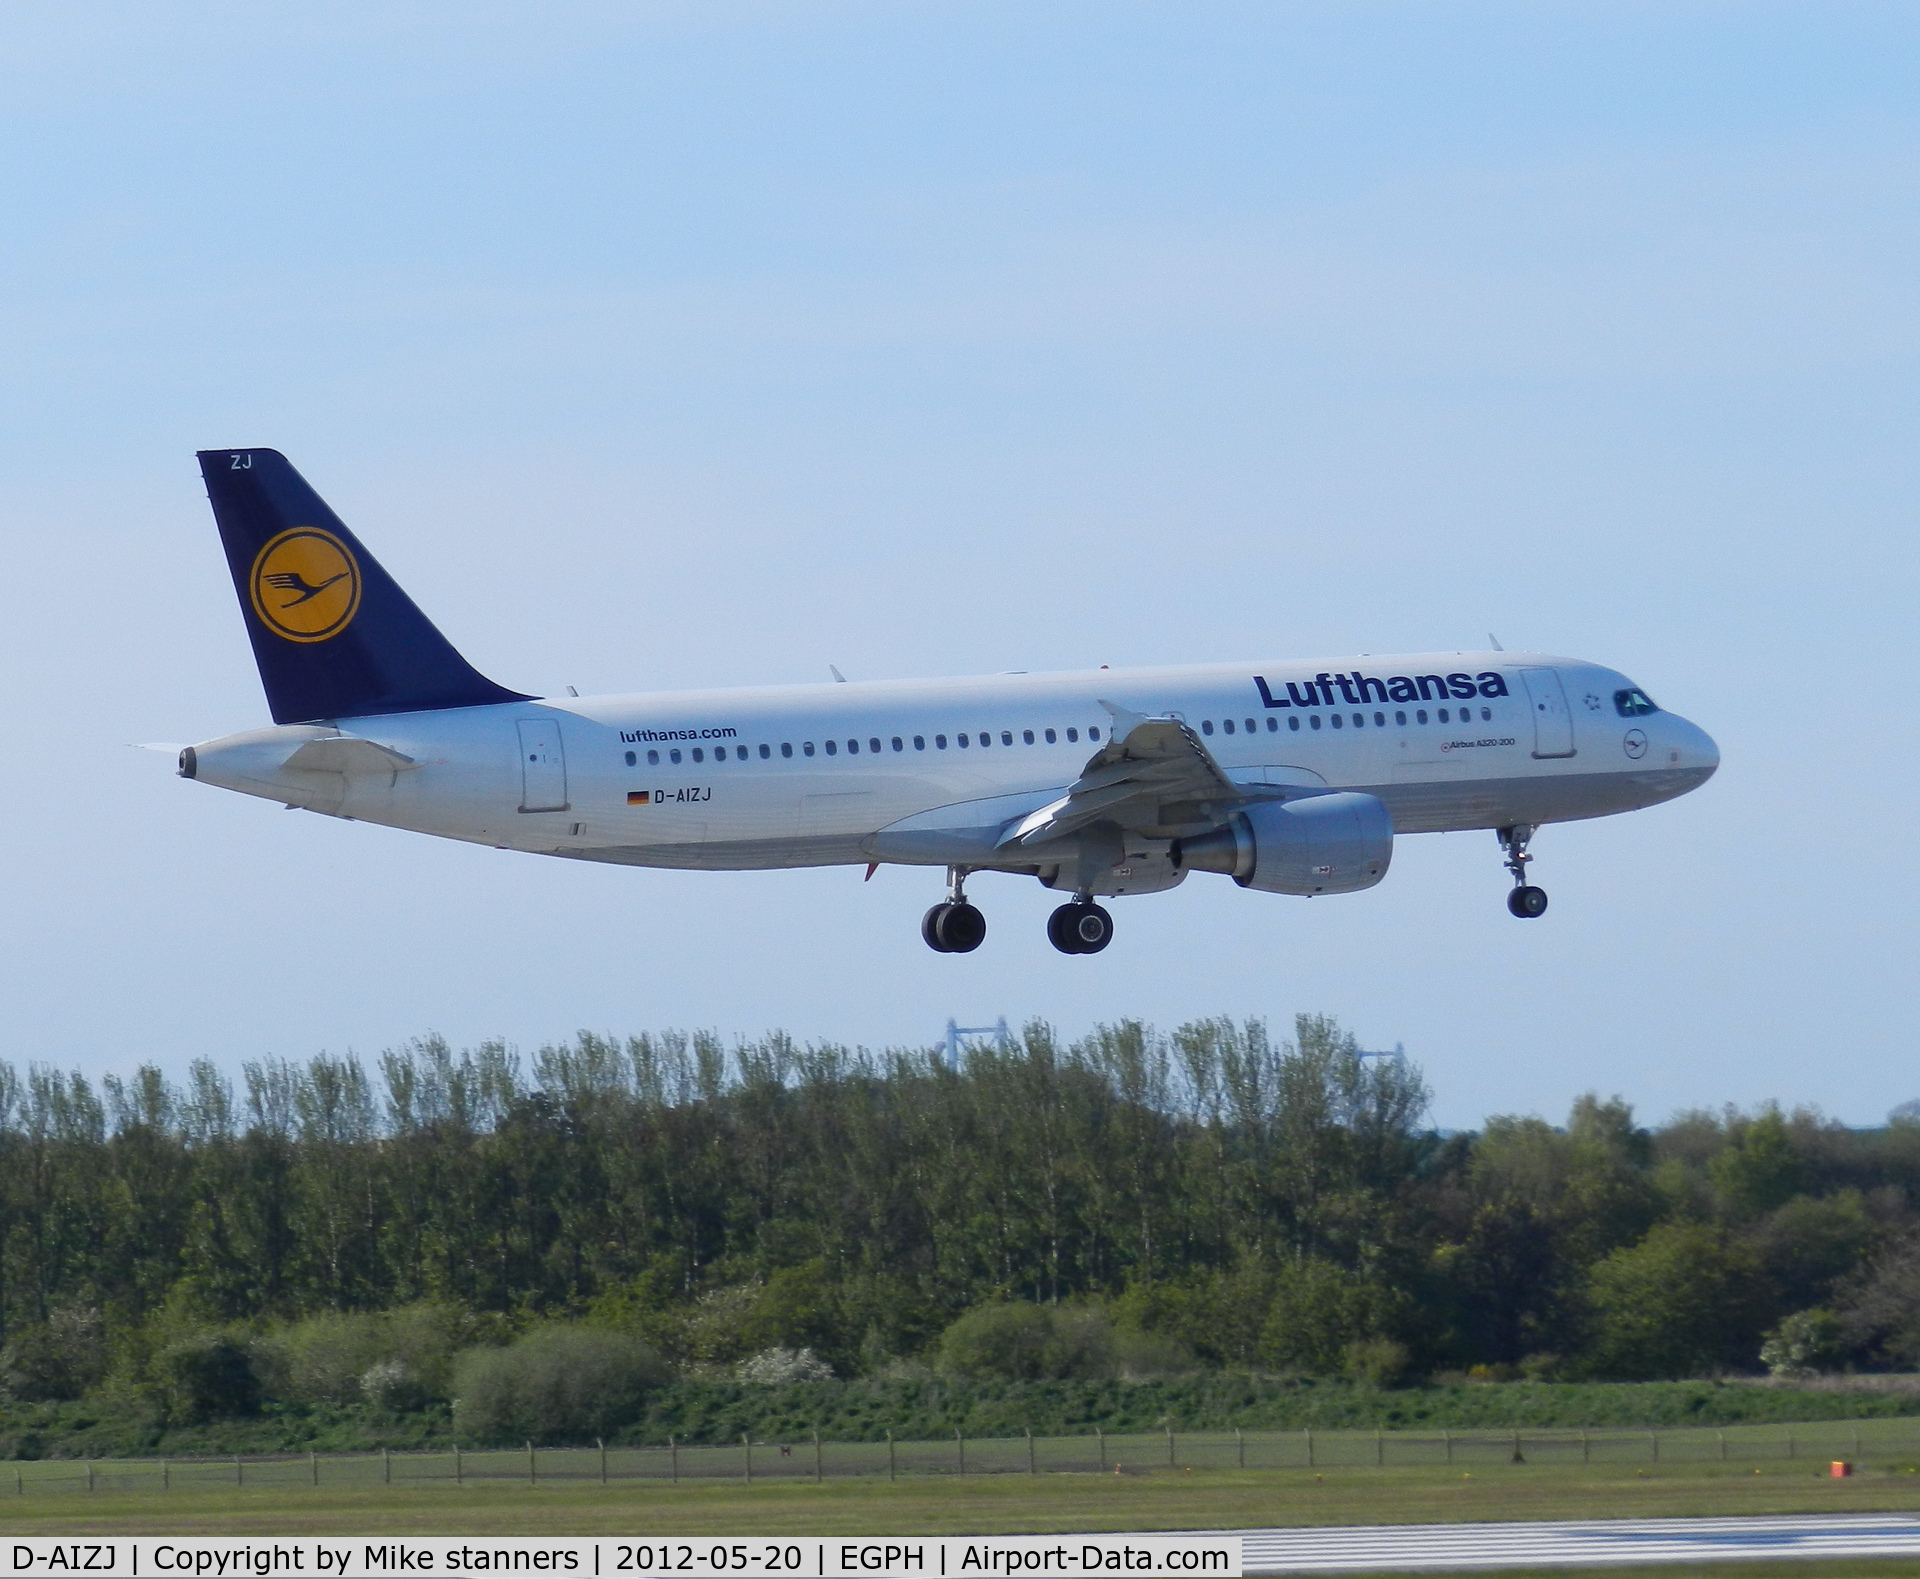 D-AIZJ, 2010 Airbus A320-214 C/N 4449, “Lufthansa 1TV” landing on runway 06 from FRA